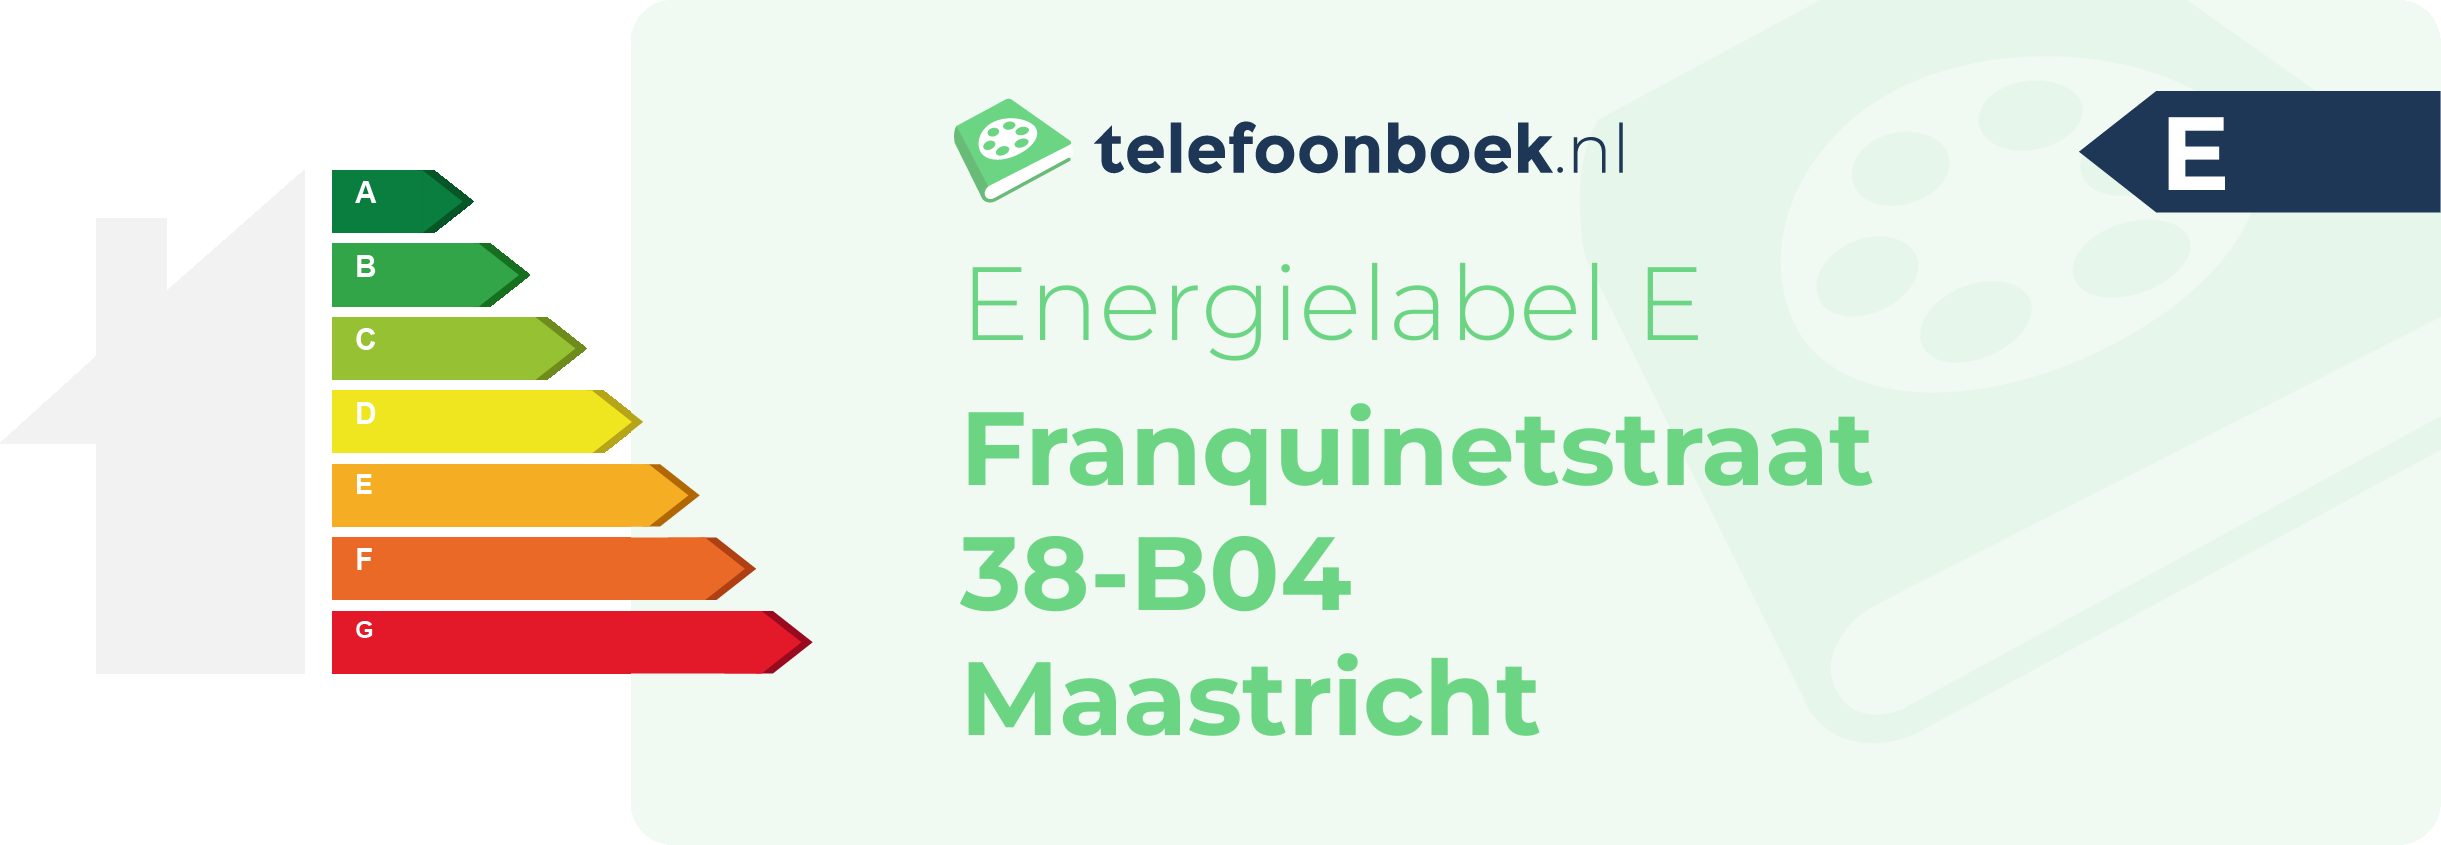 Energielabel Franquinetstraat 38-B04 Maastricht